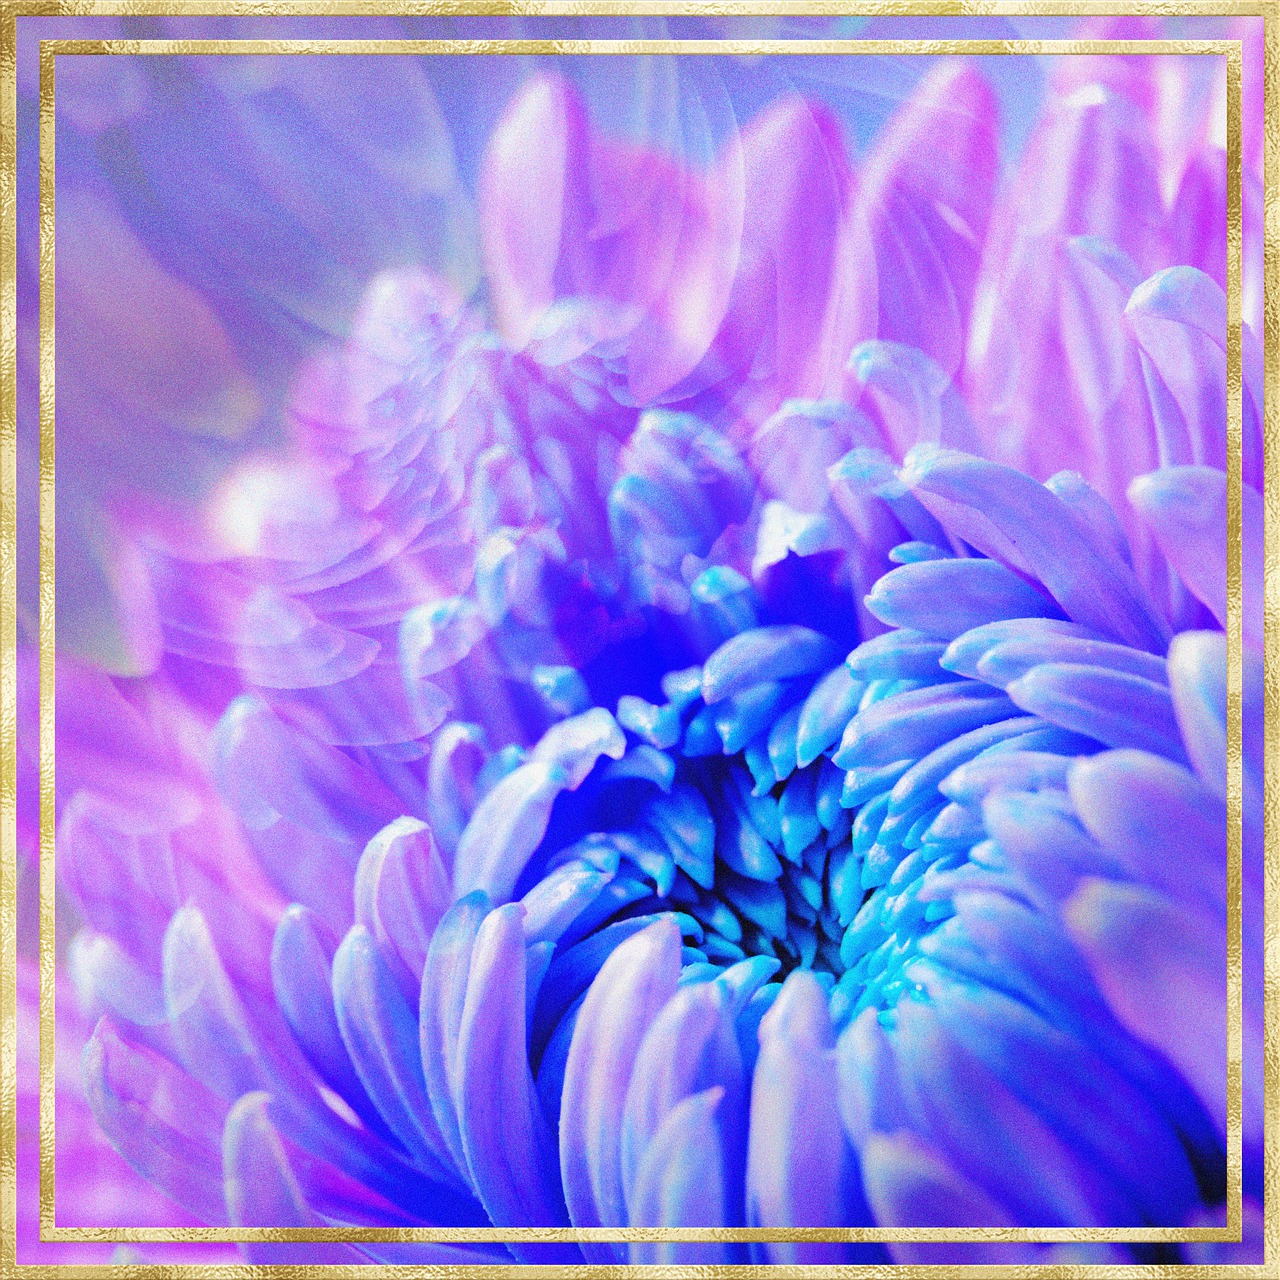 a close up of a purple and blue flower, digital art, flickr, digital art, gold framed, chrysanthemum and hyacinth, vapor wave, dreamy floral background